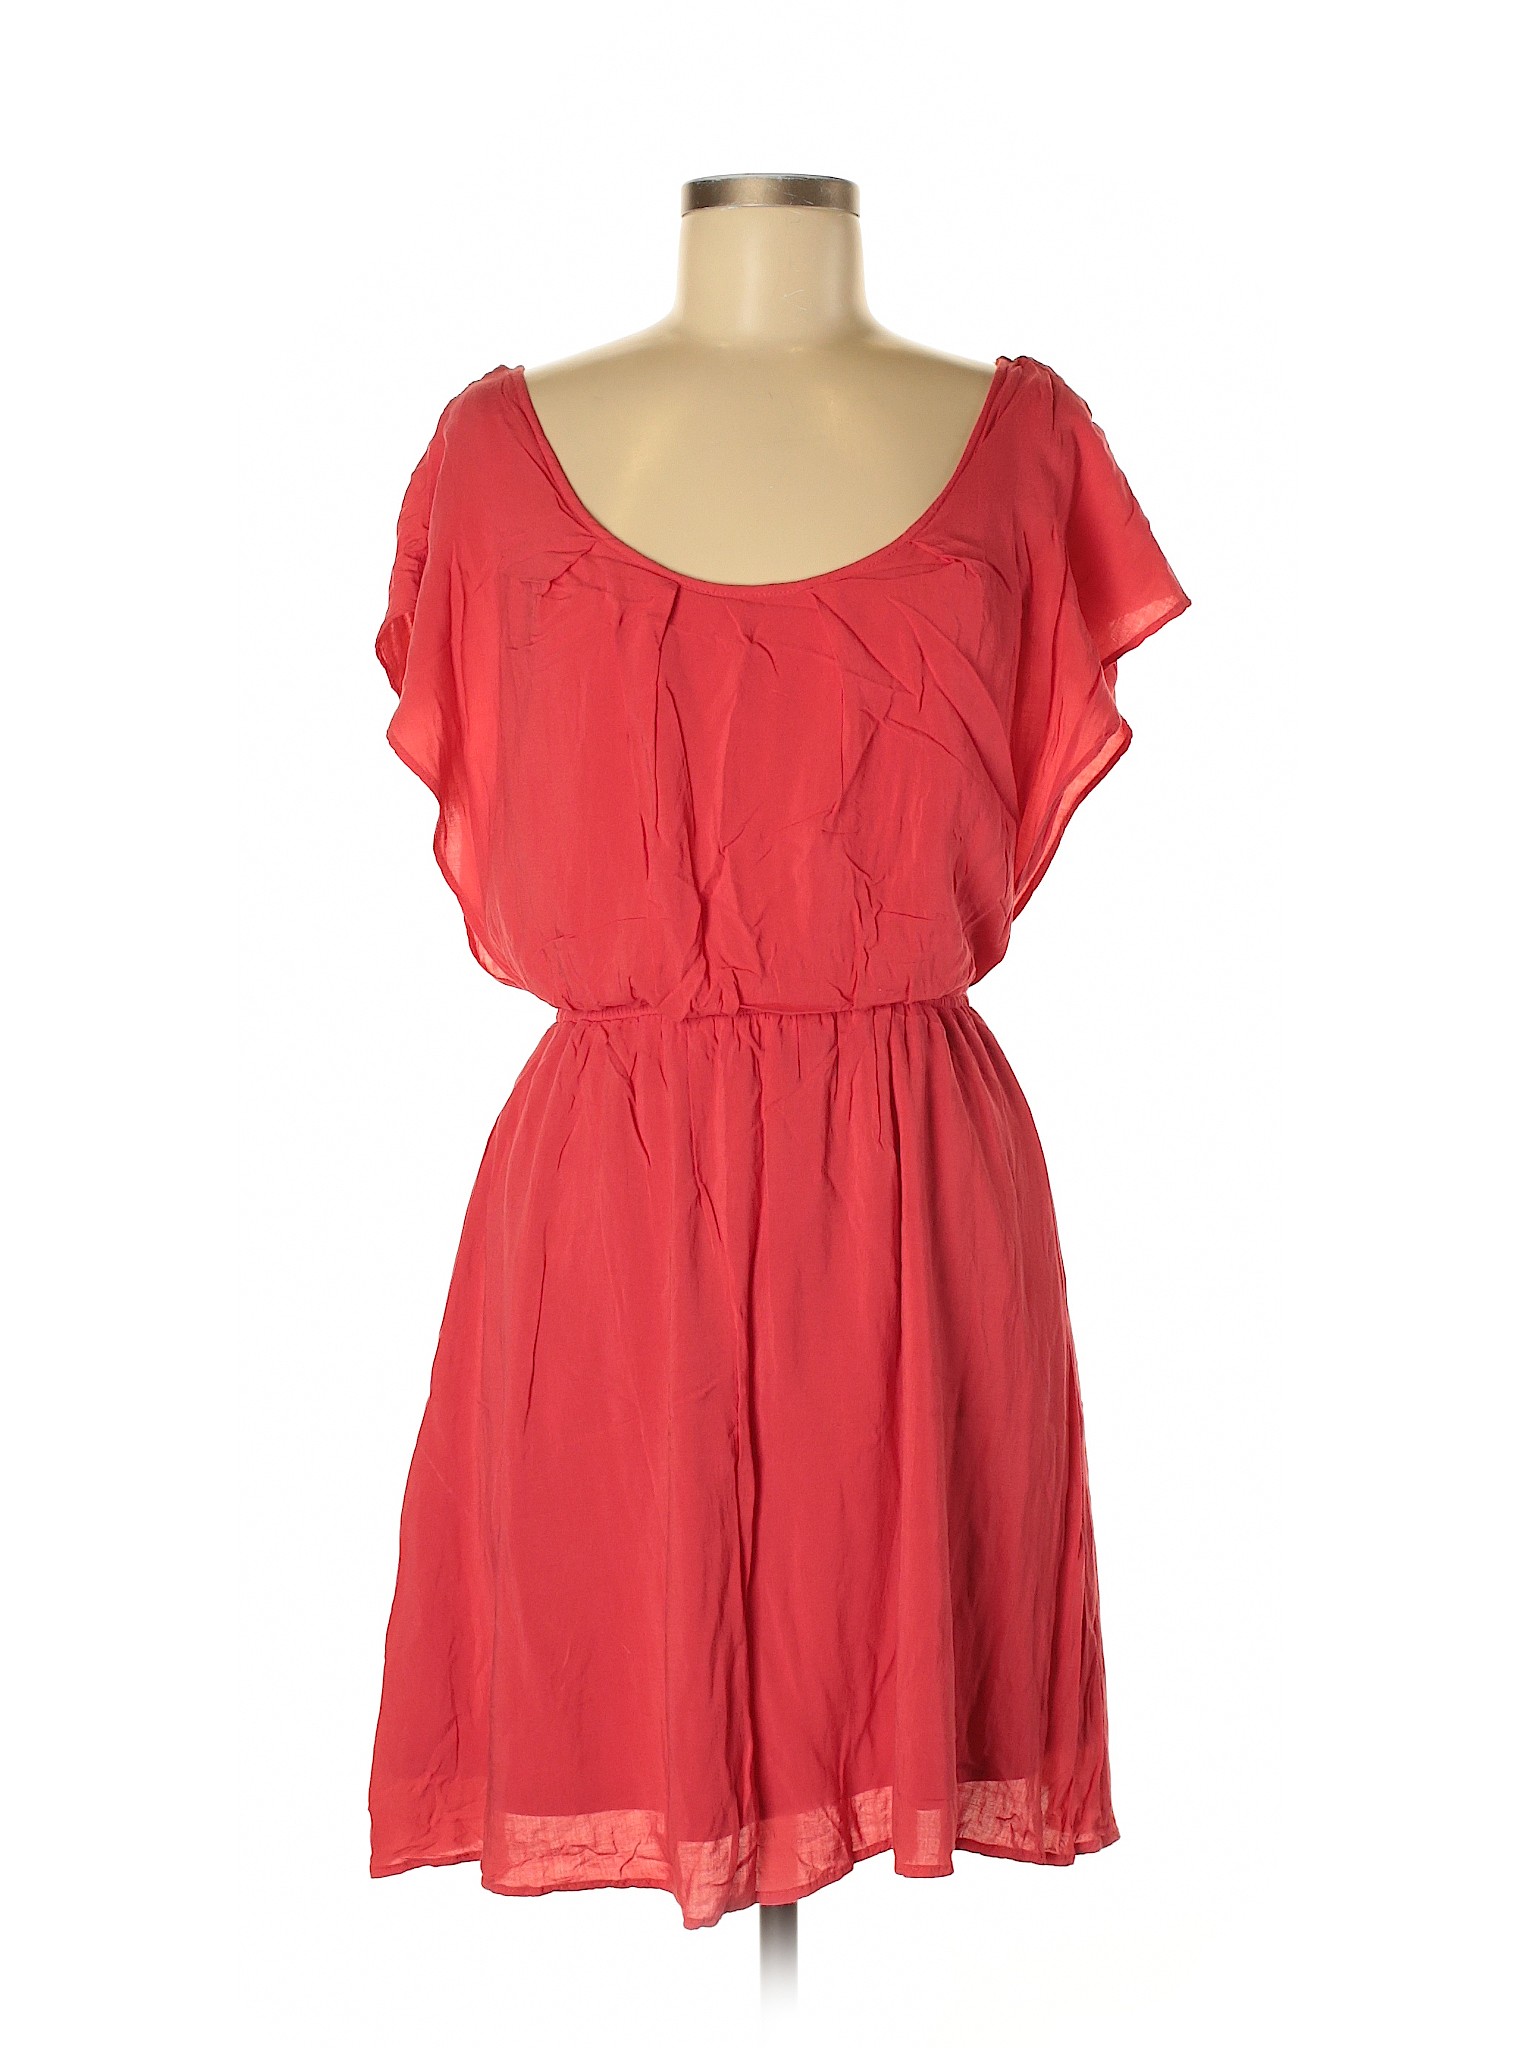 Unbranded Women Red Casual Dress M | eBay